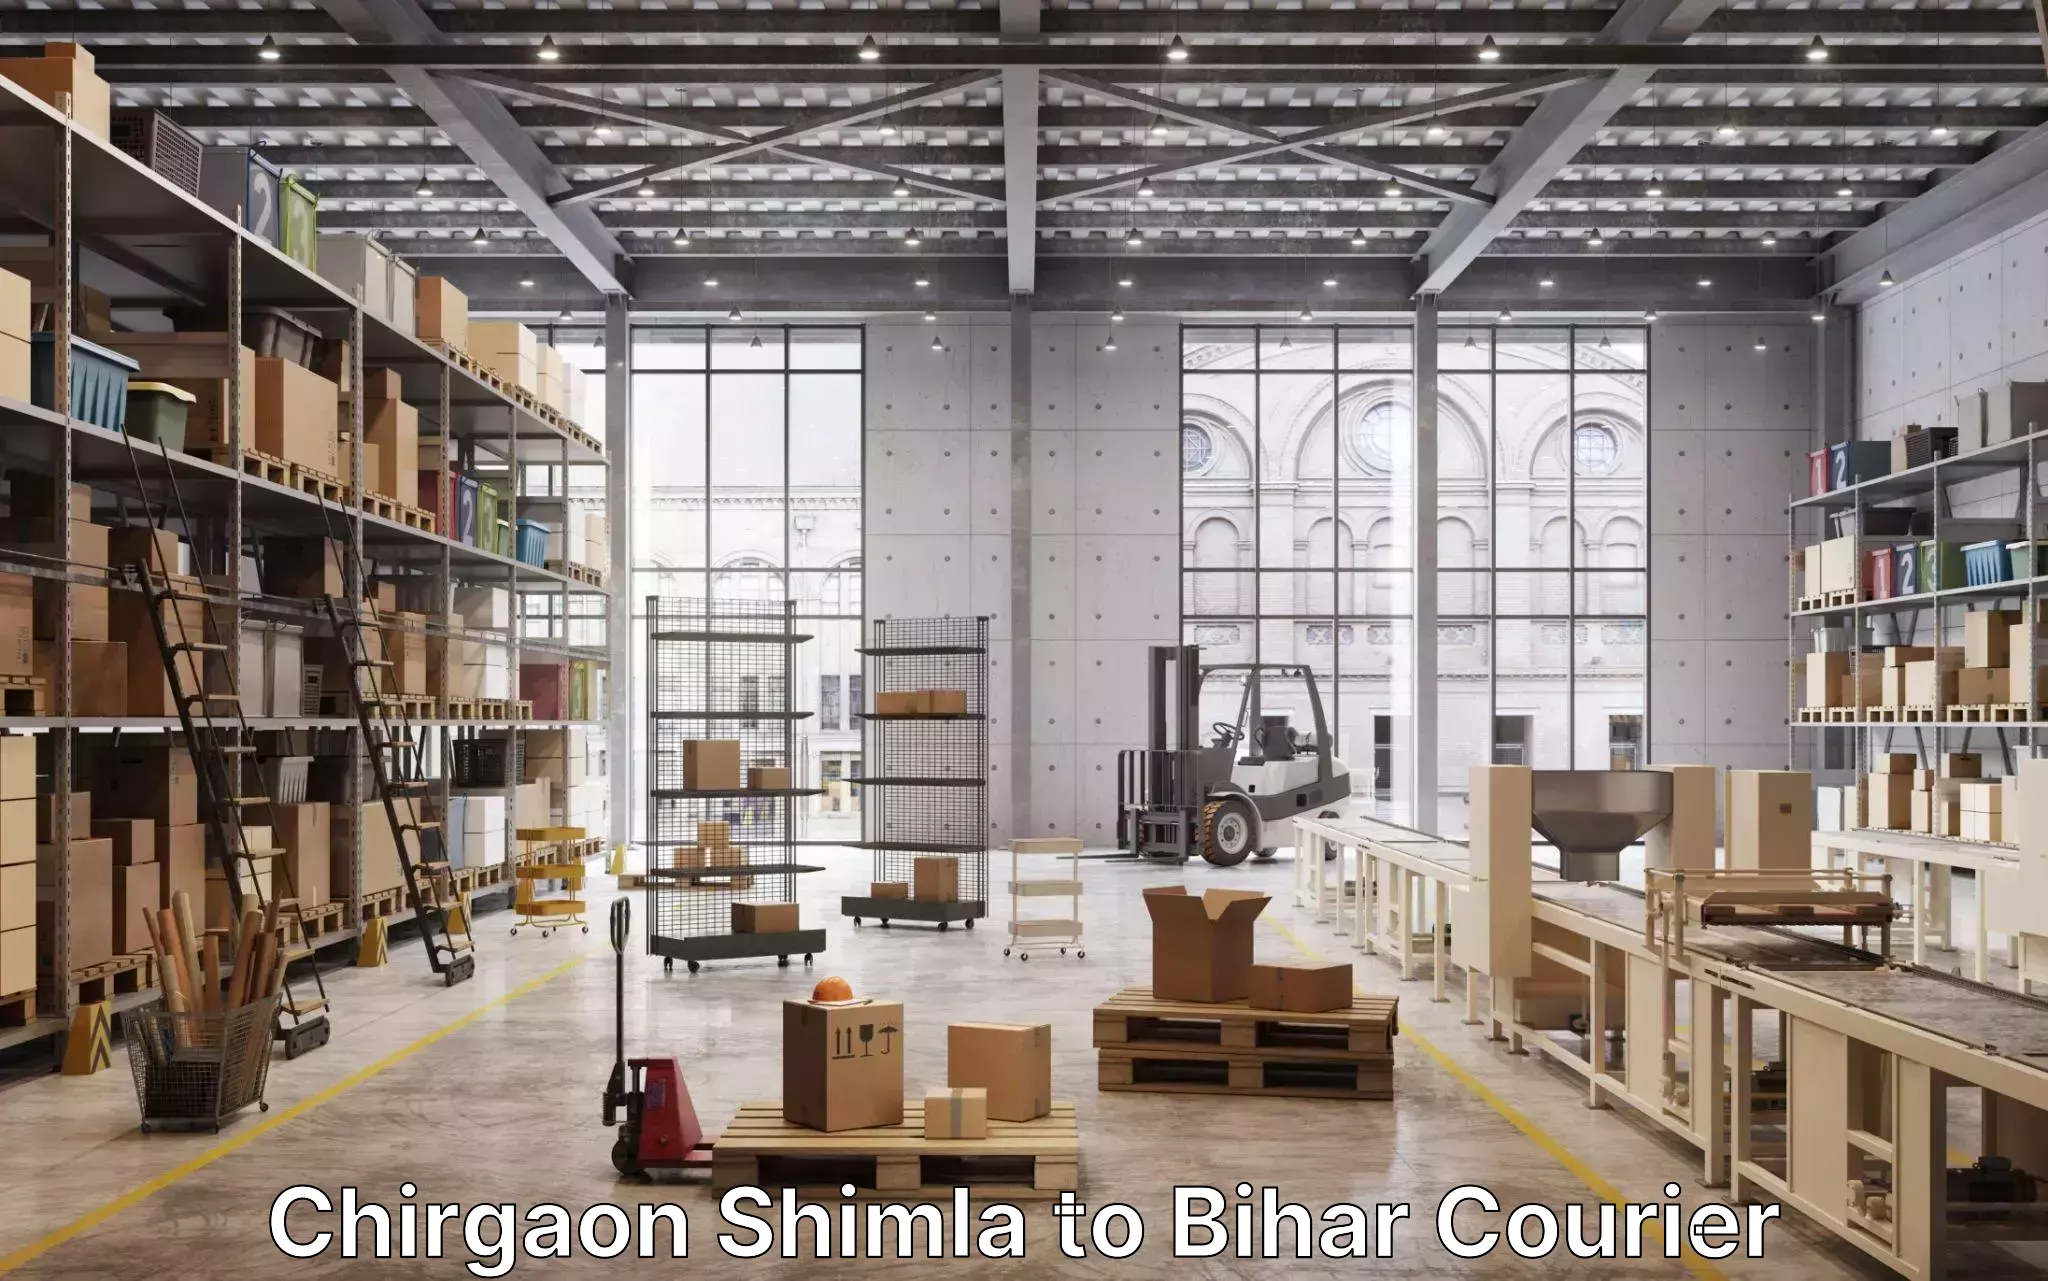 Moving and packing experts Chirgaon Shimla to Bihar